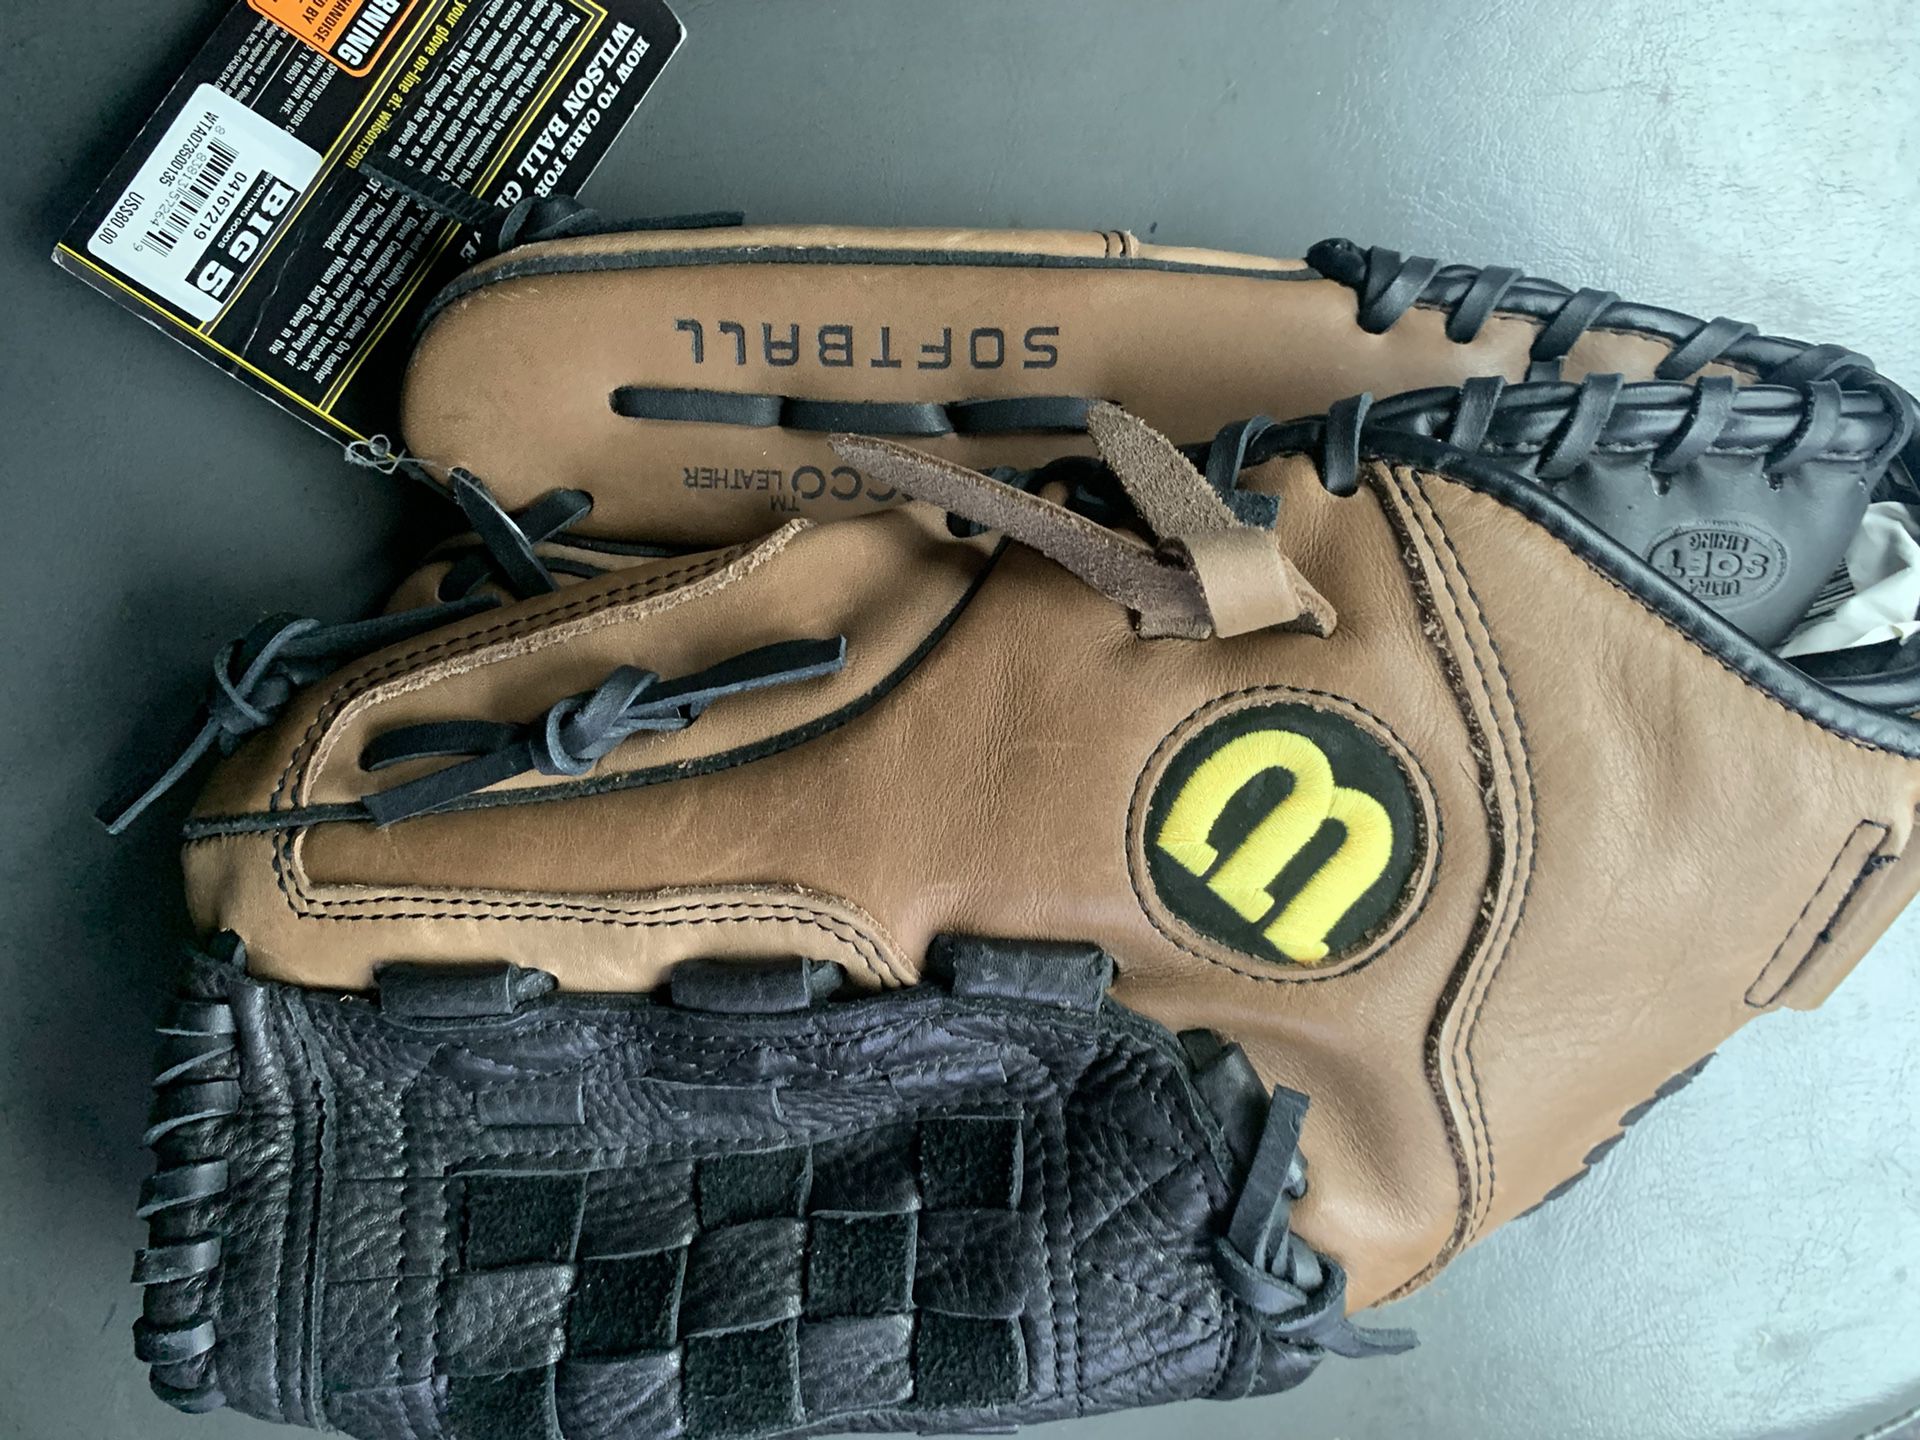 New WILSON - A735 Softball Glove/w ECCO Leather 